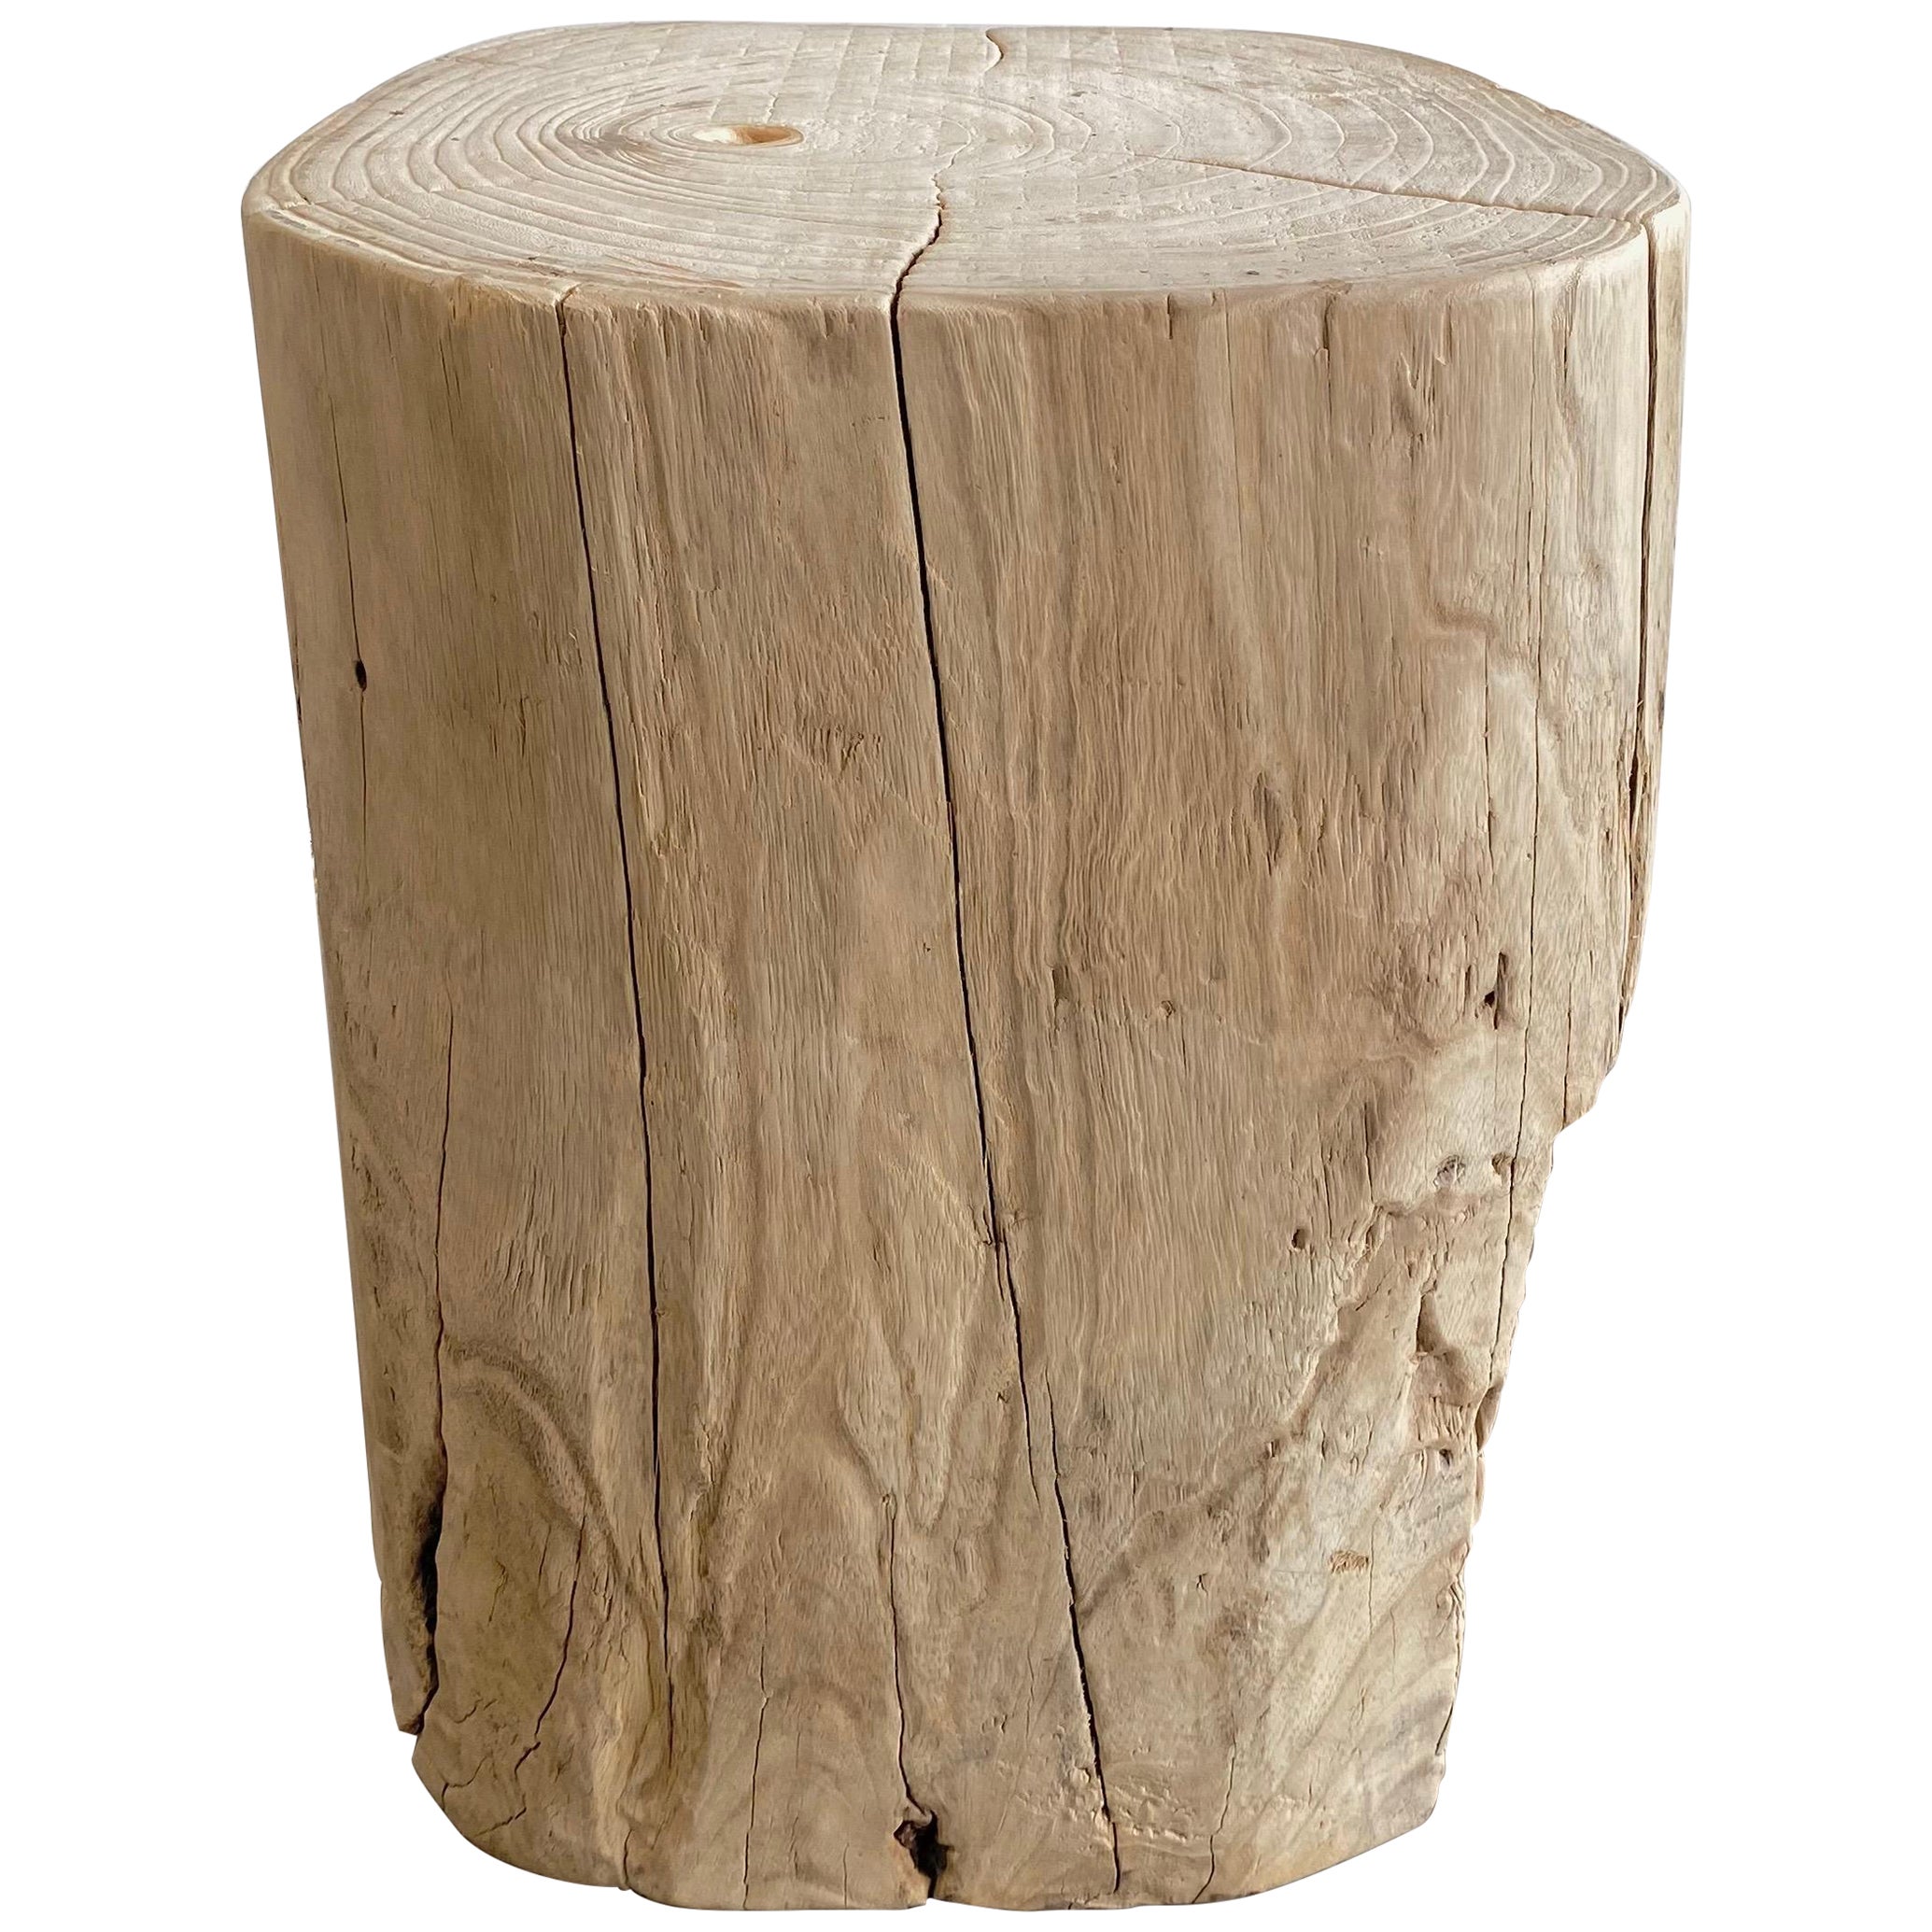 Vintage Natural Wood Stump Side Table